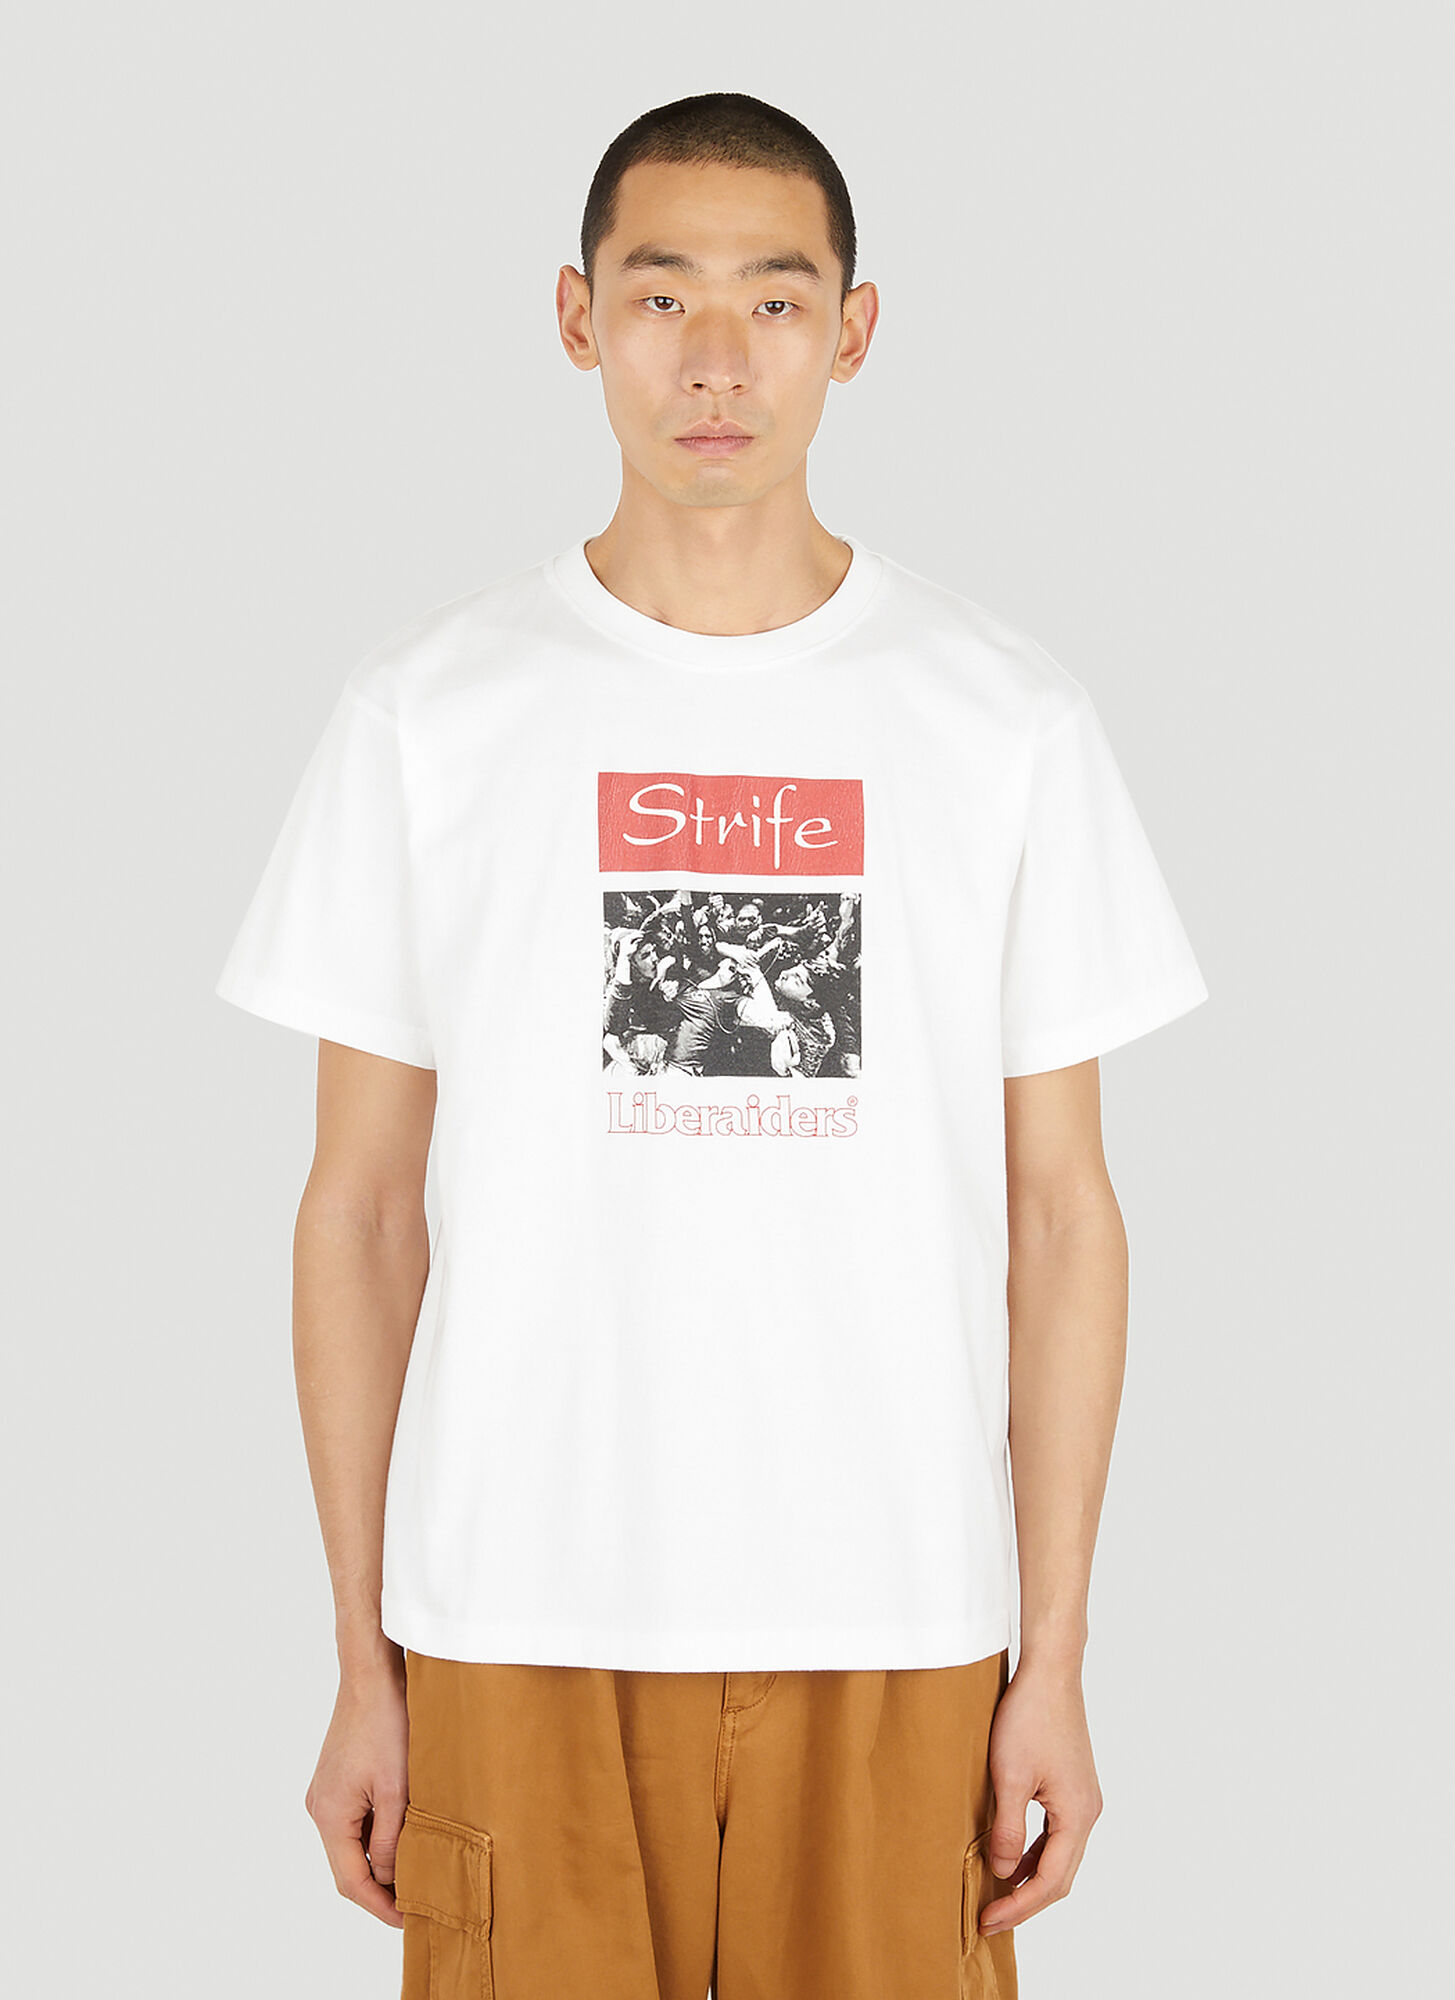 Liberaiders Strife Tour Photo T-shirt Male White